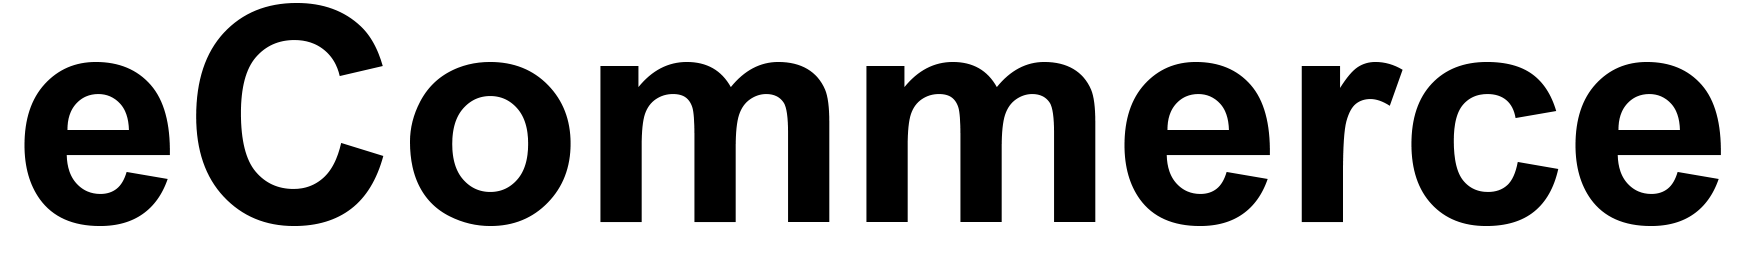 Asalta eCommerce System Logo